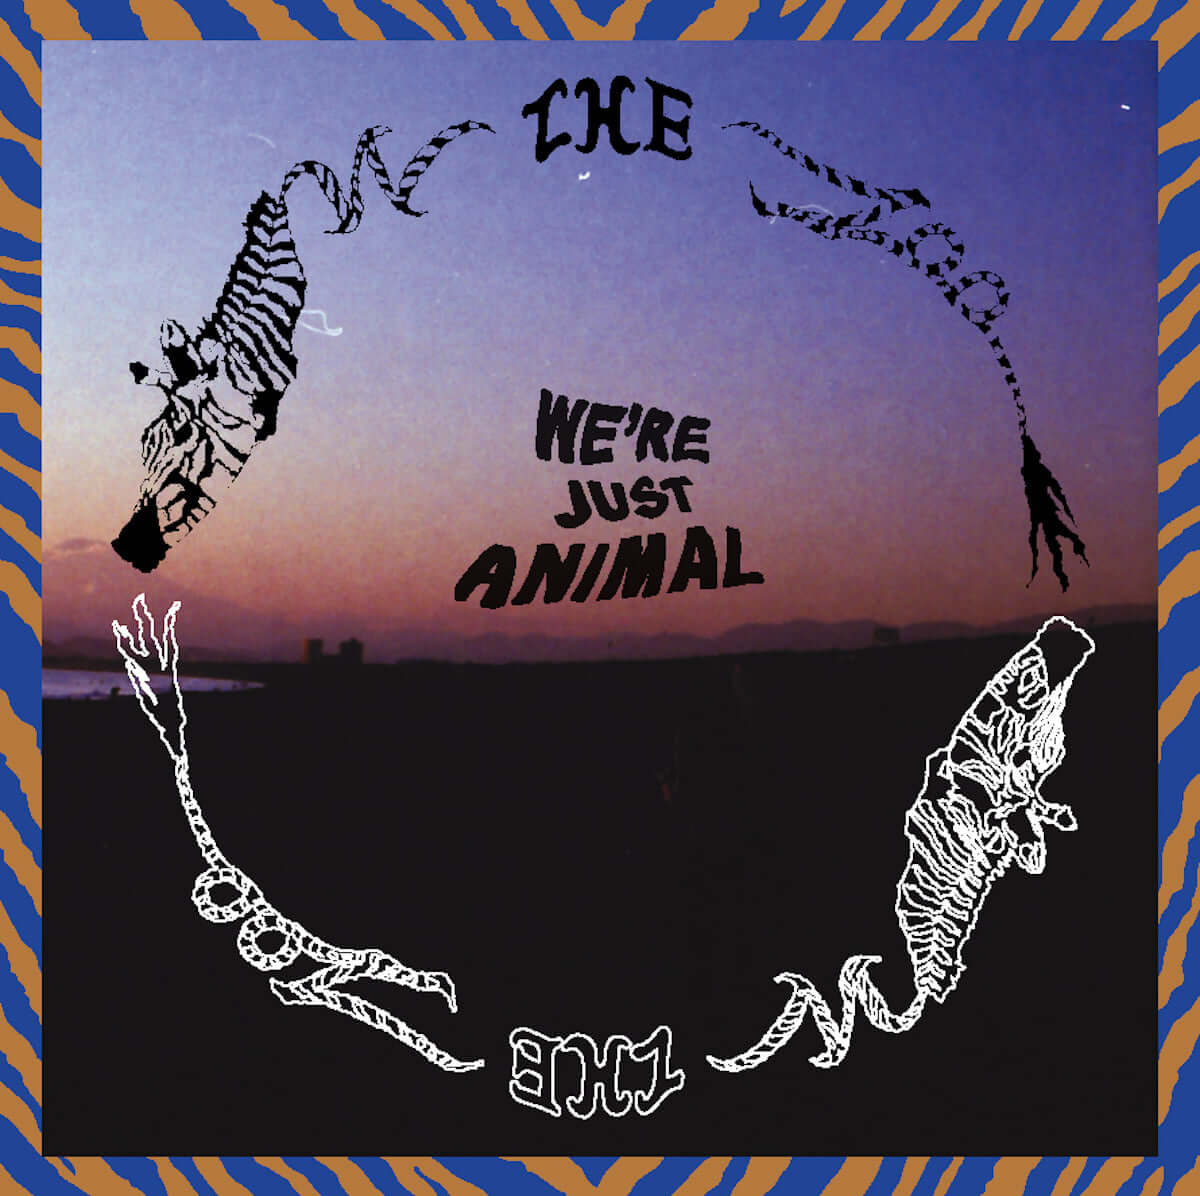 Suchmosのアナログ盤「In The Zoo／Pacific Blues」が新ALに先行して3月13日に限定発売 music190311-suchmos-1-1200x1196